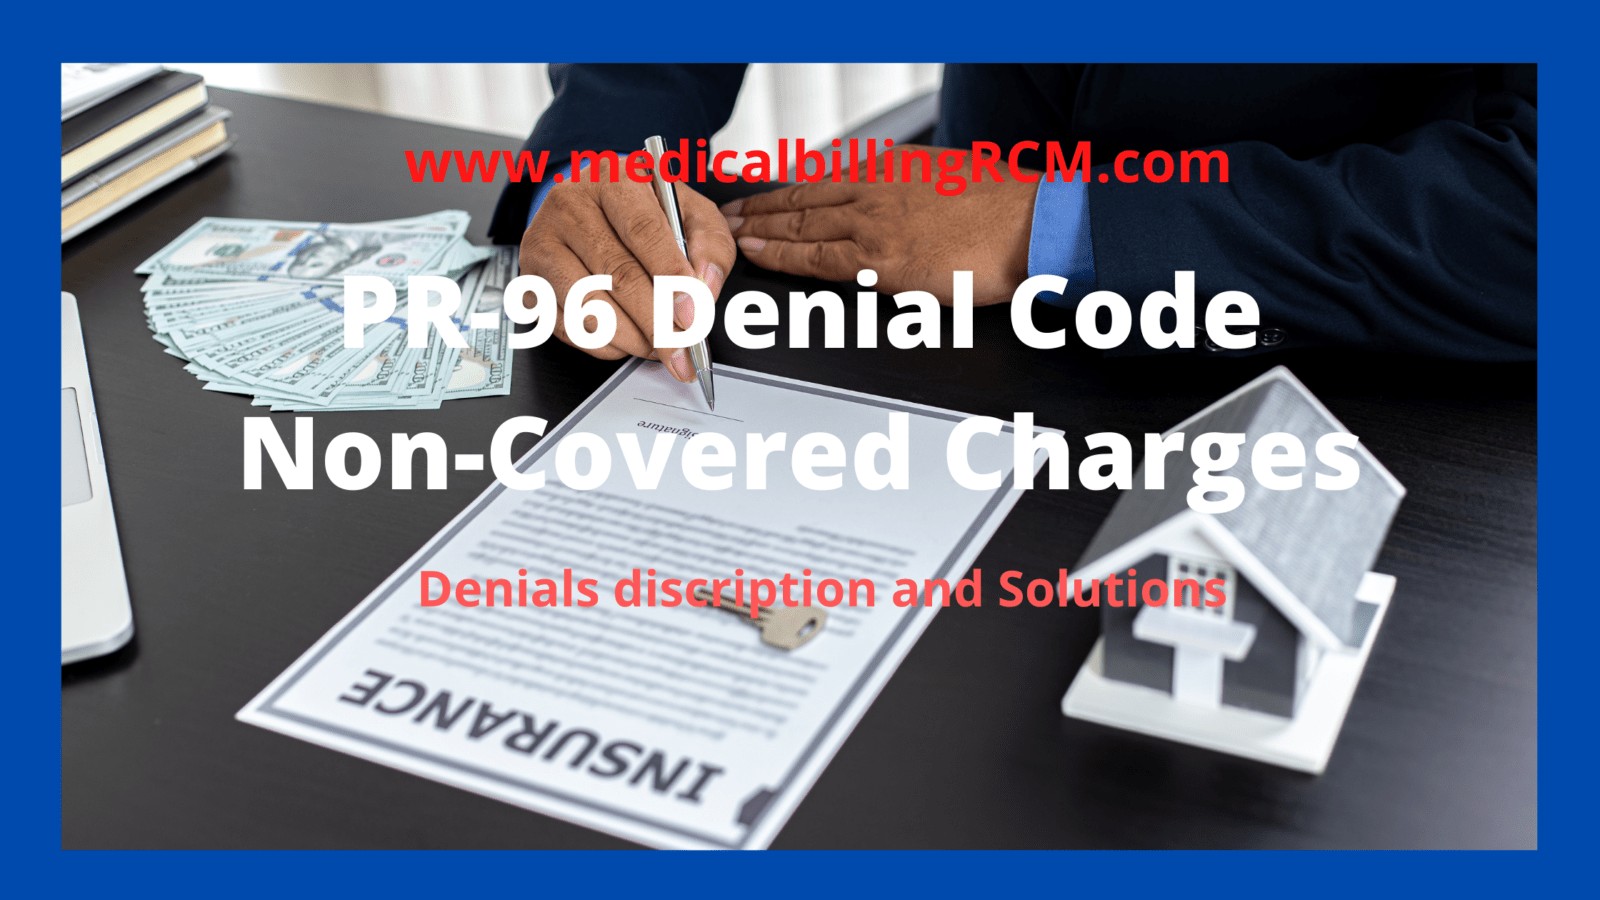 PR 96 denial code in medical billing and coding